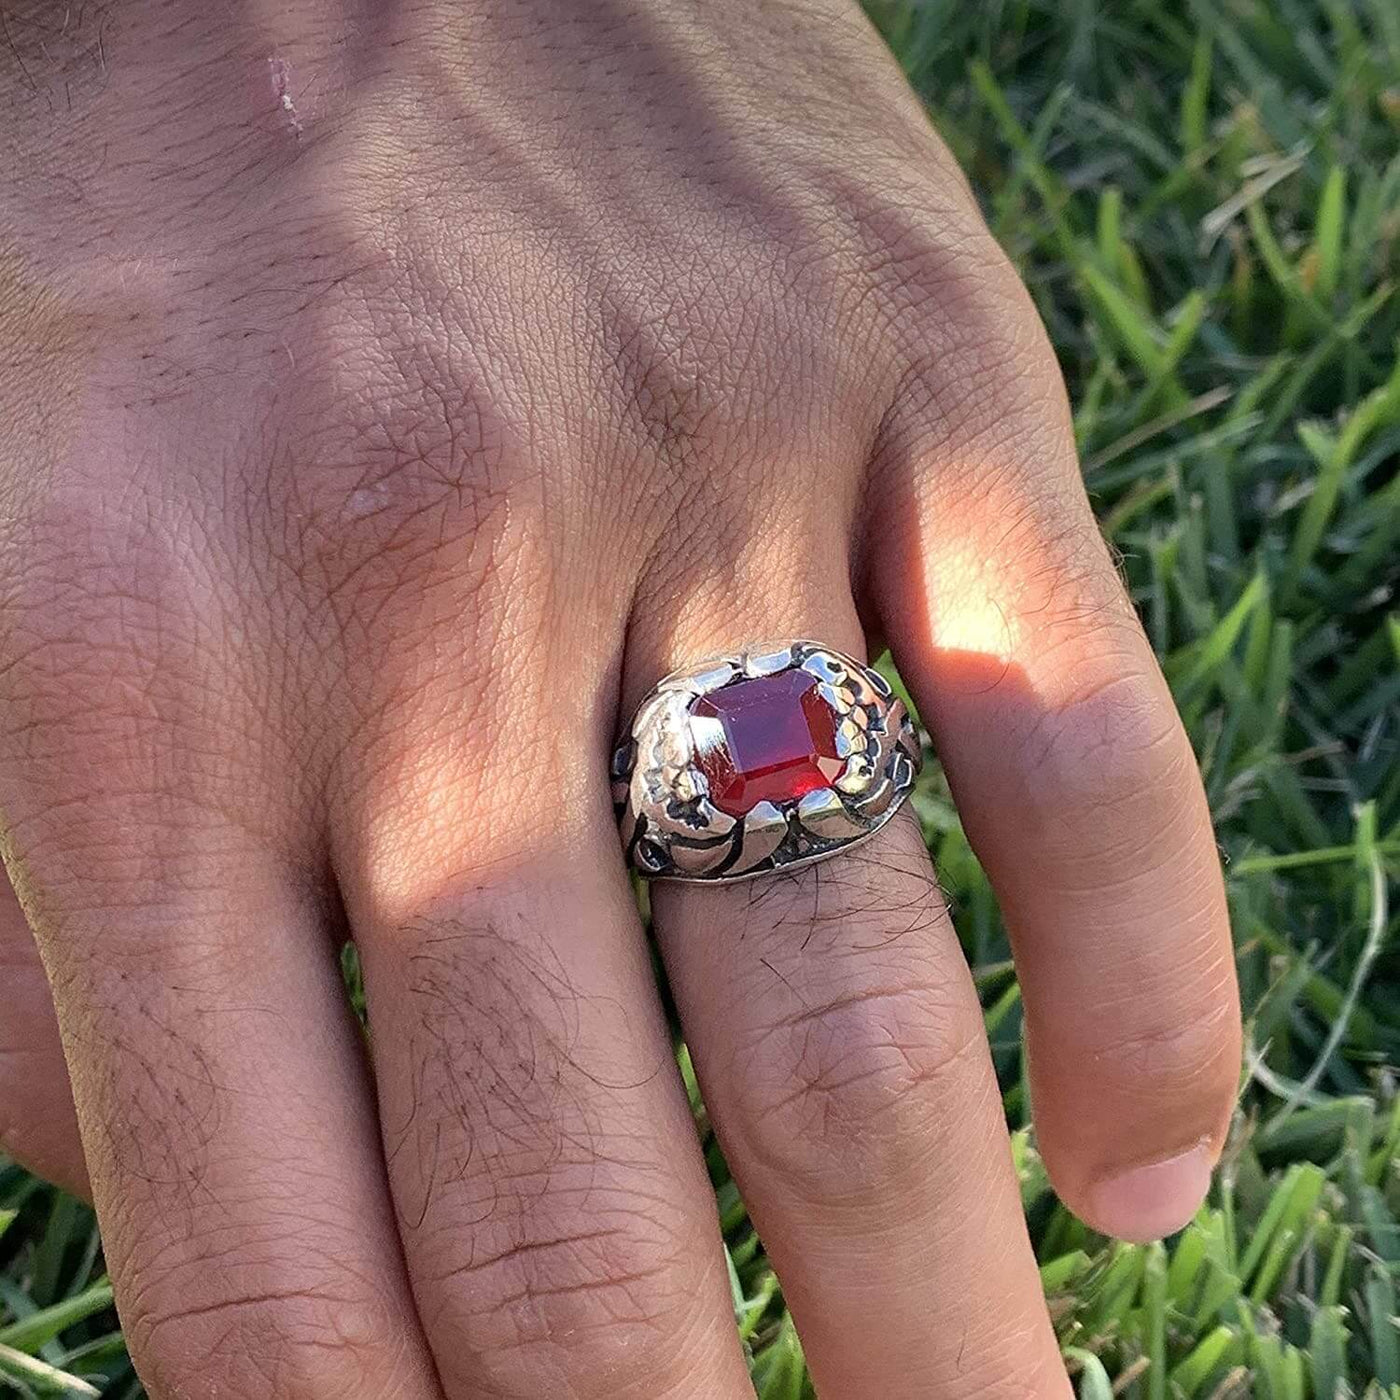 Handmade Ruby Rings | AlAliGems | Ruby Vintage Ring Red Real Ruby Stone | Yaqoot Stone Size 8.25 - Al Ali Gems